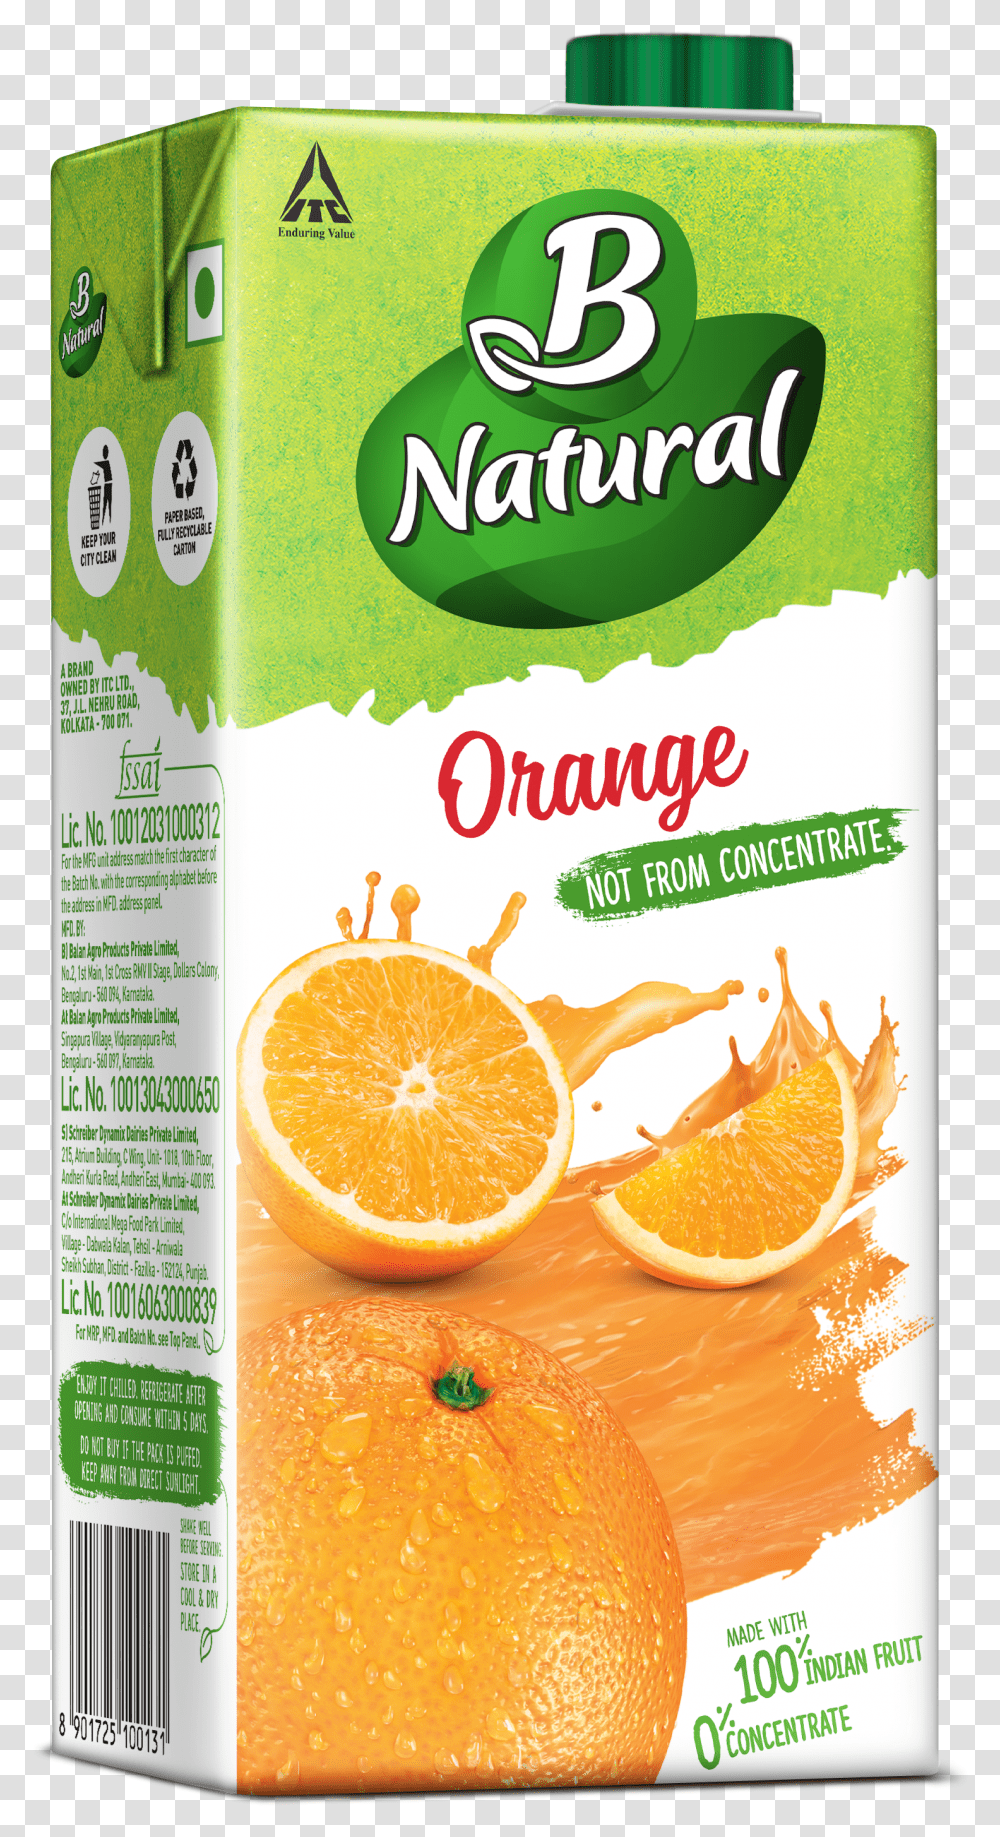 B Natural - 100 Indian Fruit 0 Concentrate B Natural Orange Juice Transparent Png